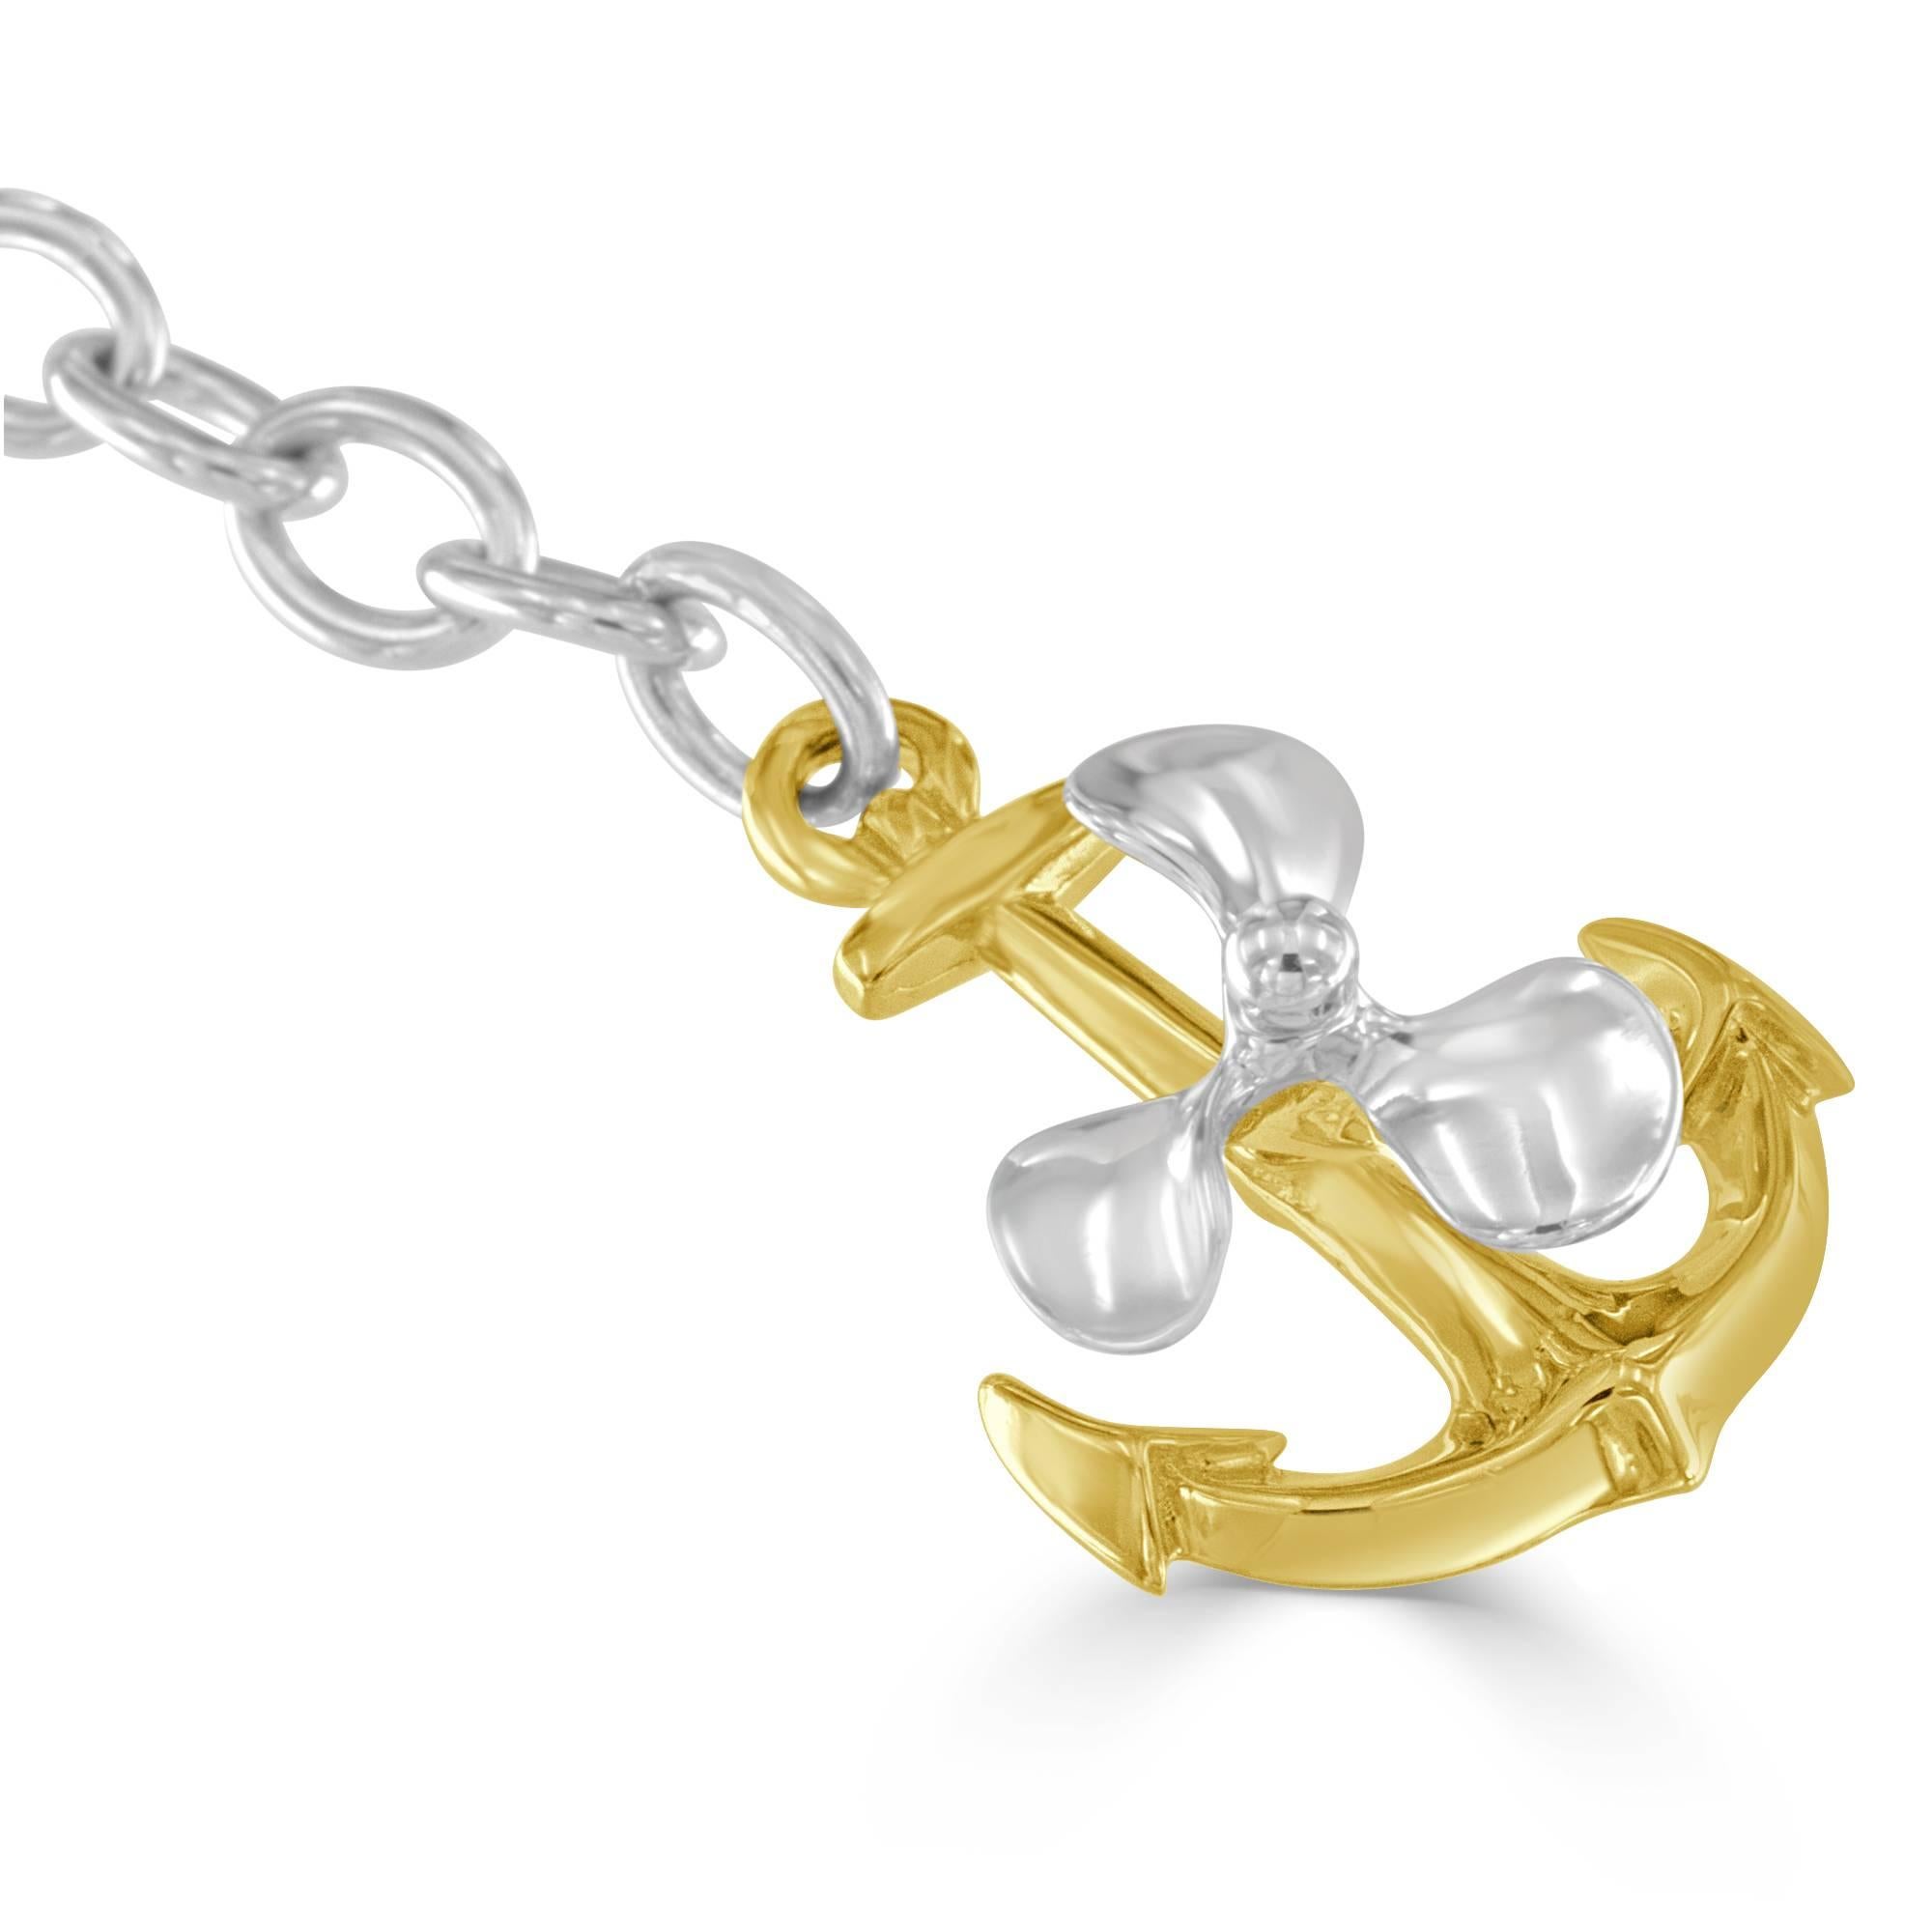 gold anchor key